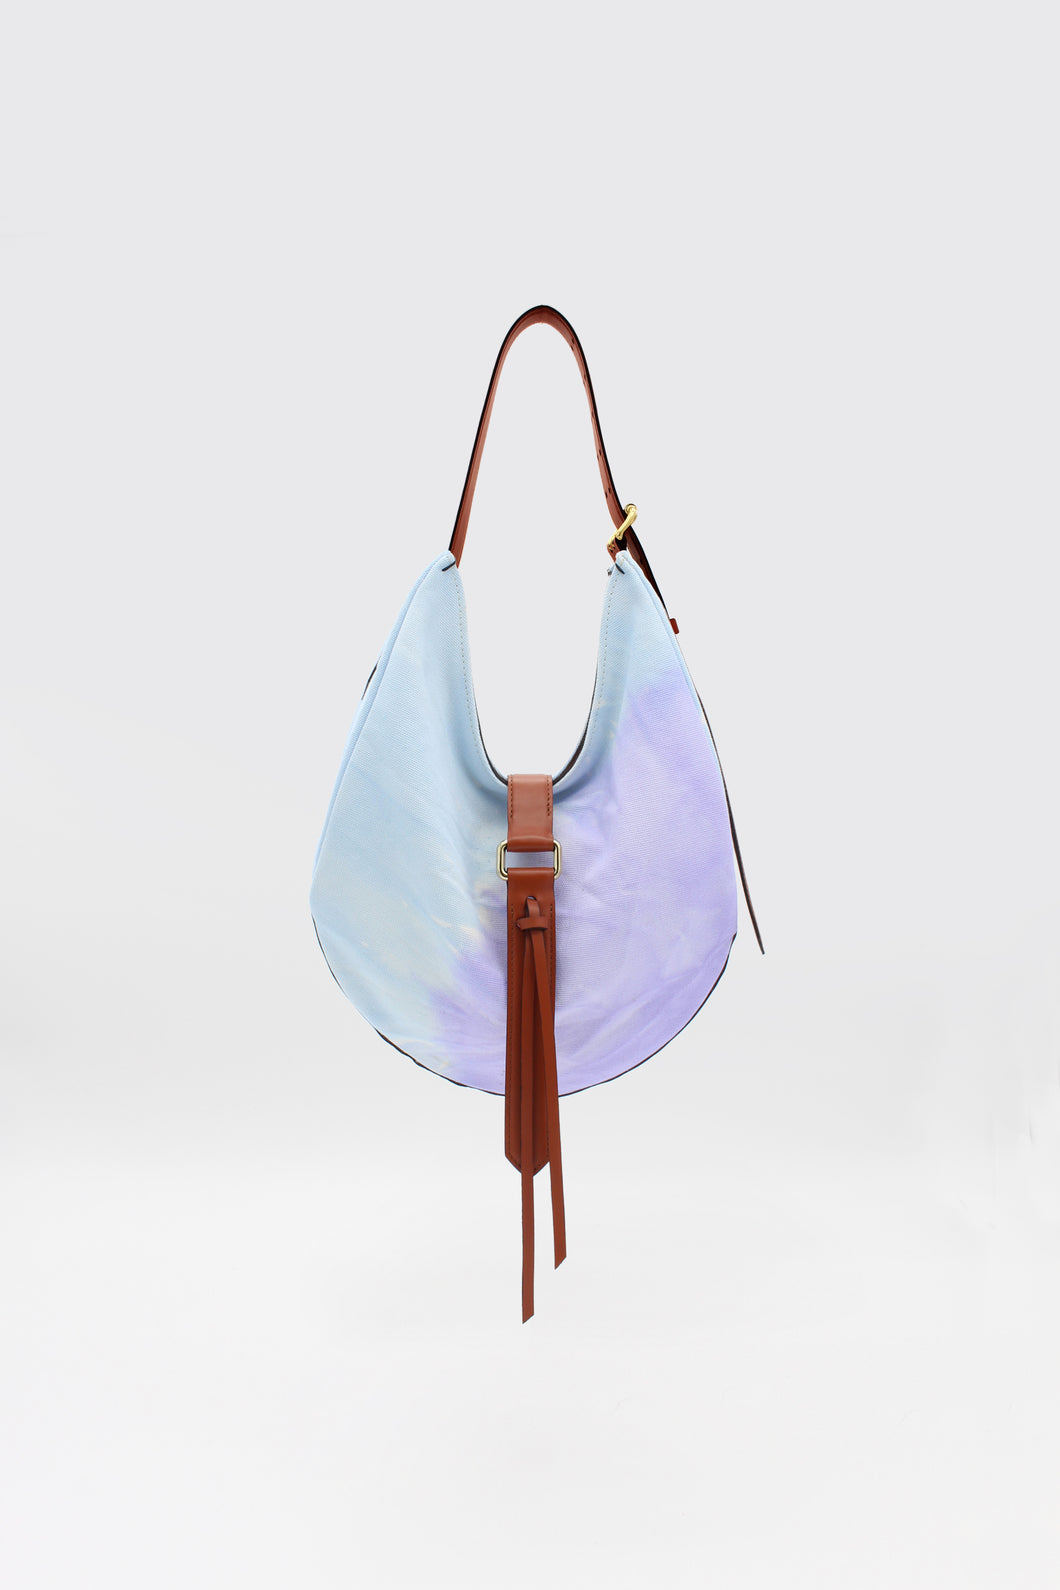 Sunset Bag Mini Tie-dye Canvas light blu + lillac